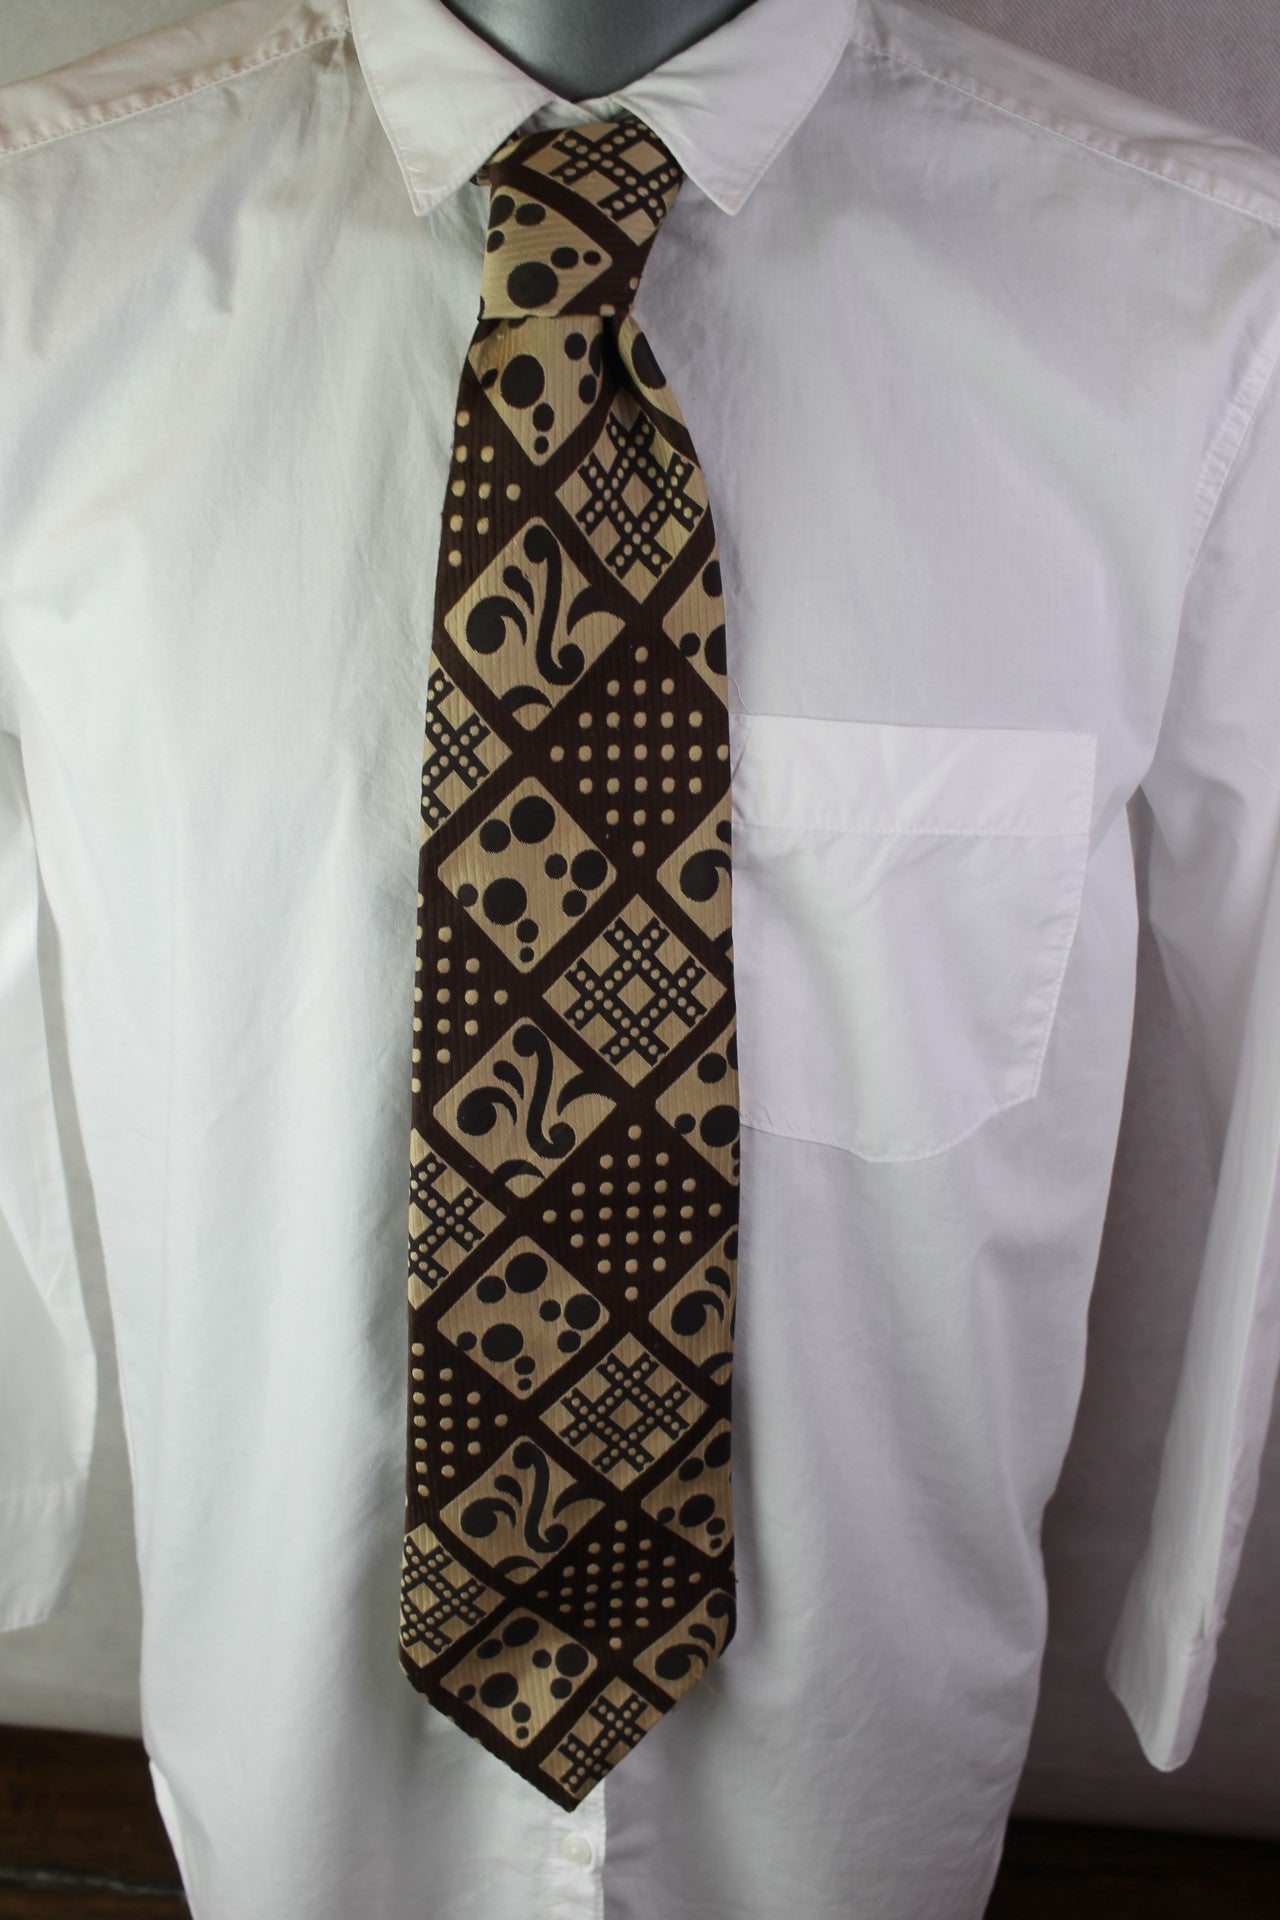 Vintage 1950s/1960s brown gold squares pattern tie